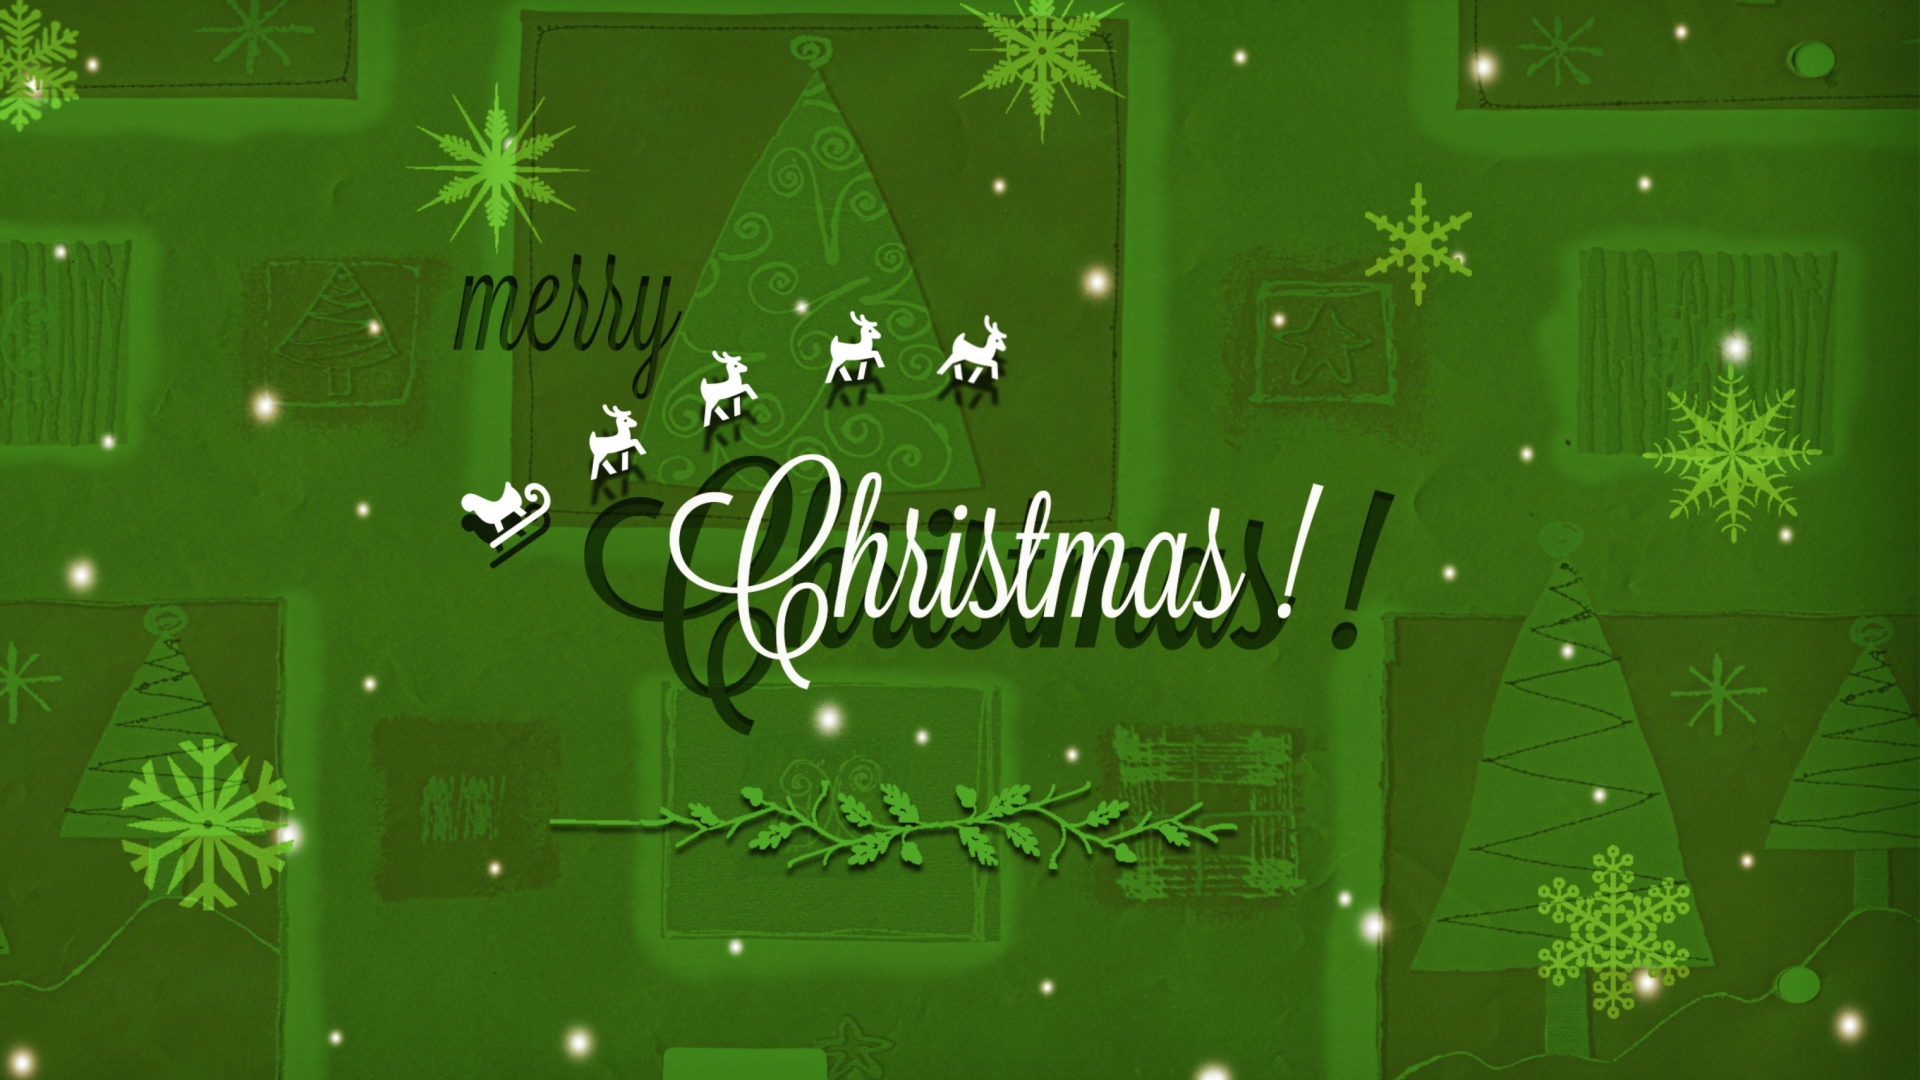 Merry Christmas! wallpaper 1920x1080